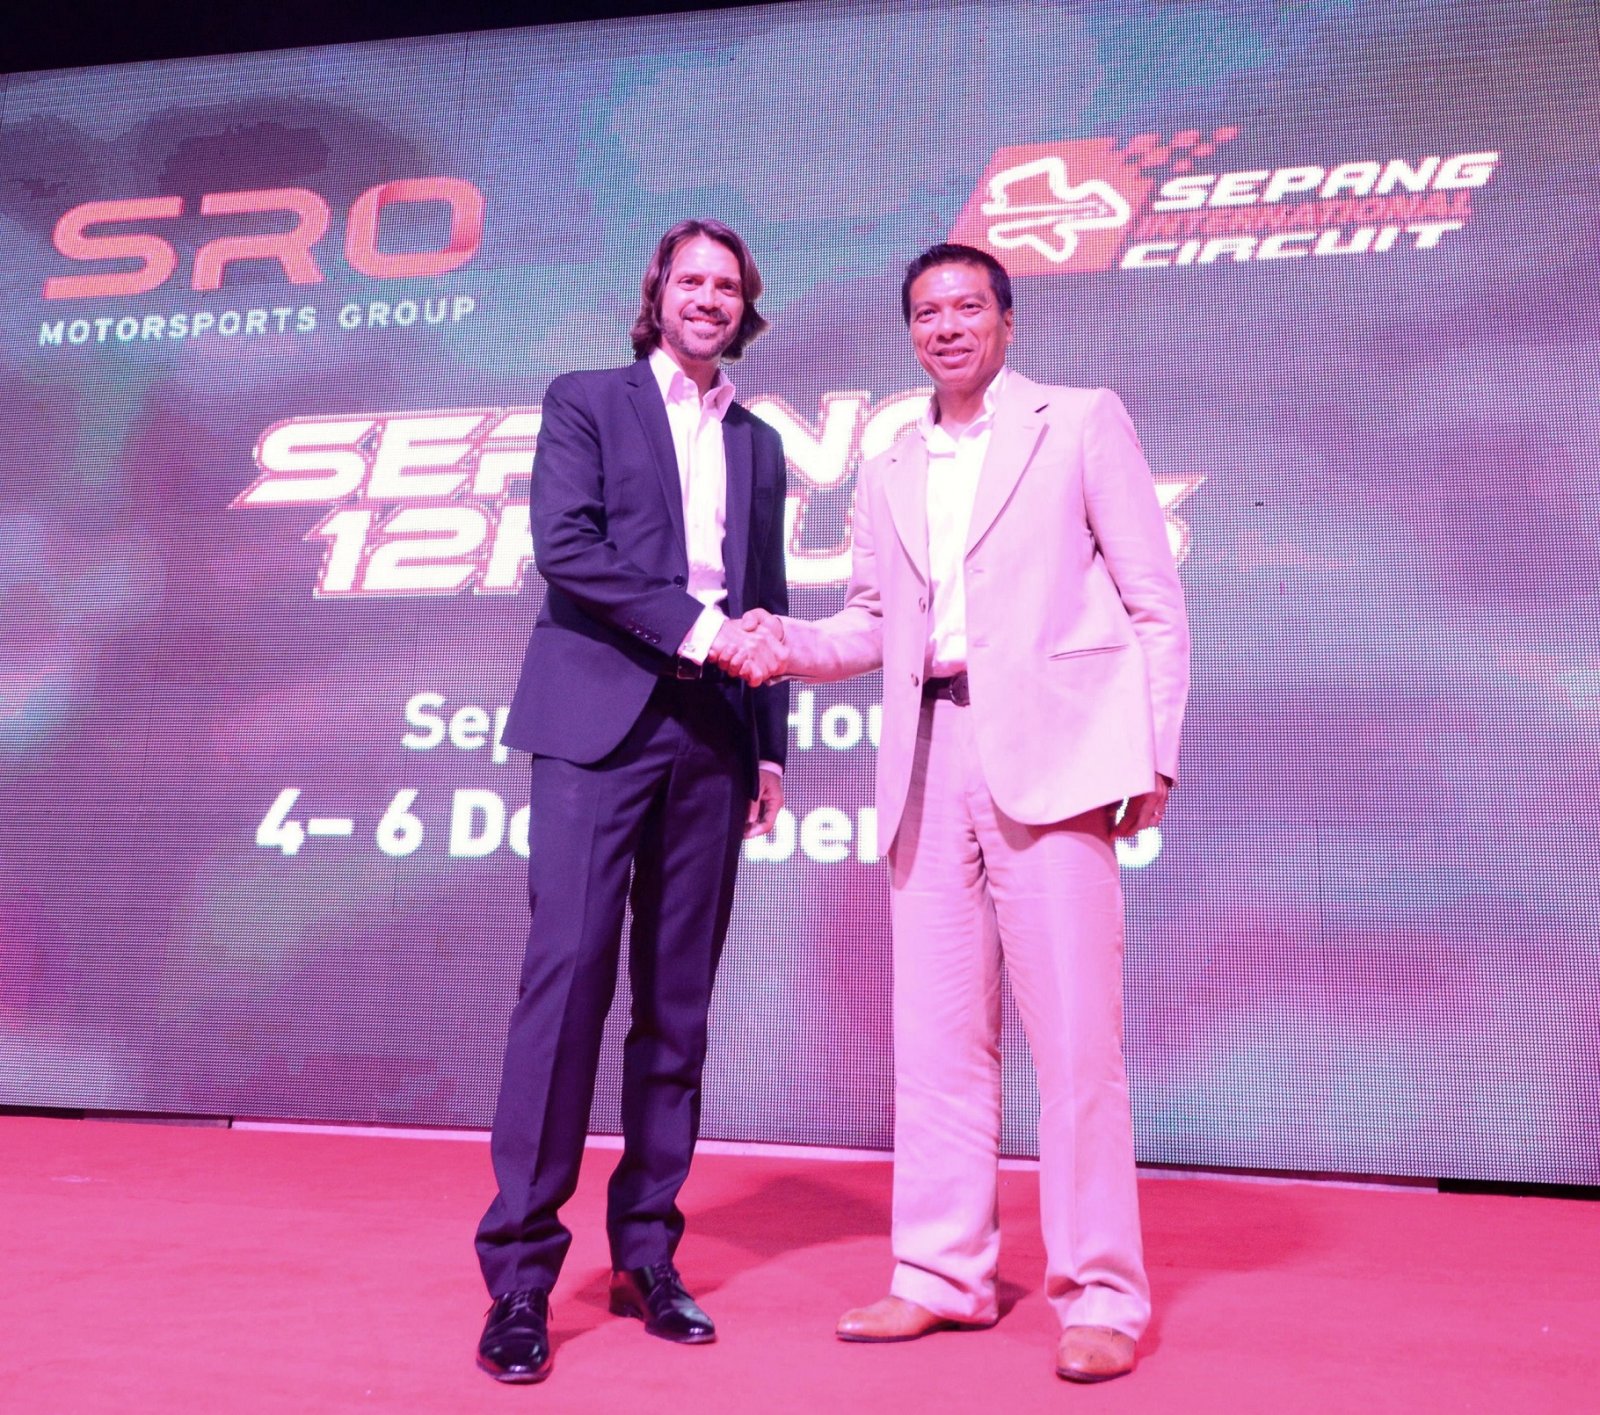 SRO Motorsports Group enters partnership with Sepang International Circuit to promote Sepang 12 hours